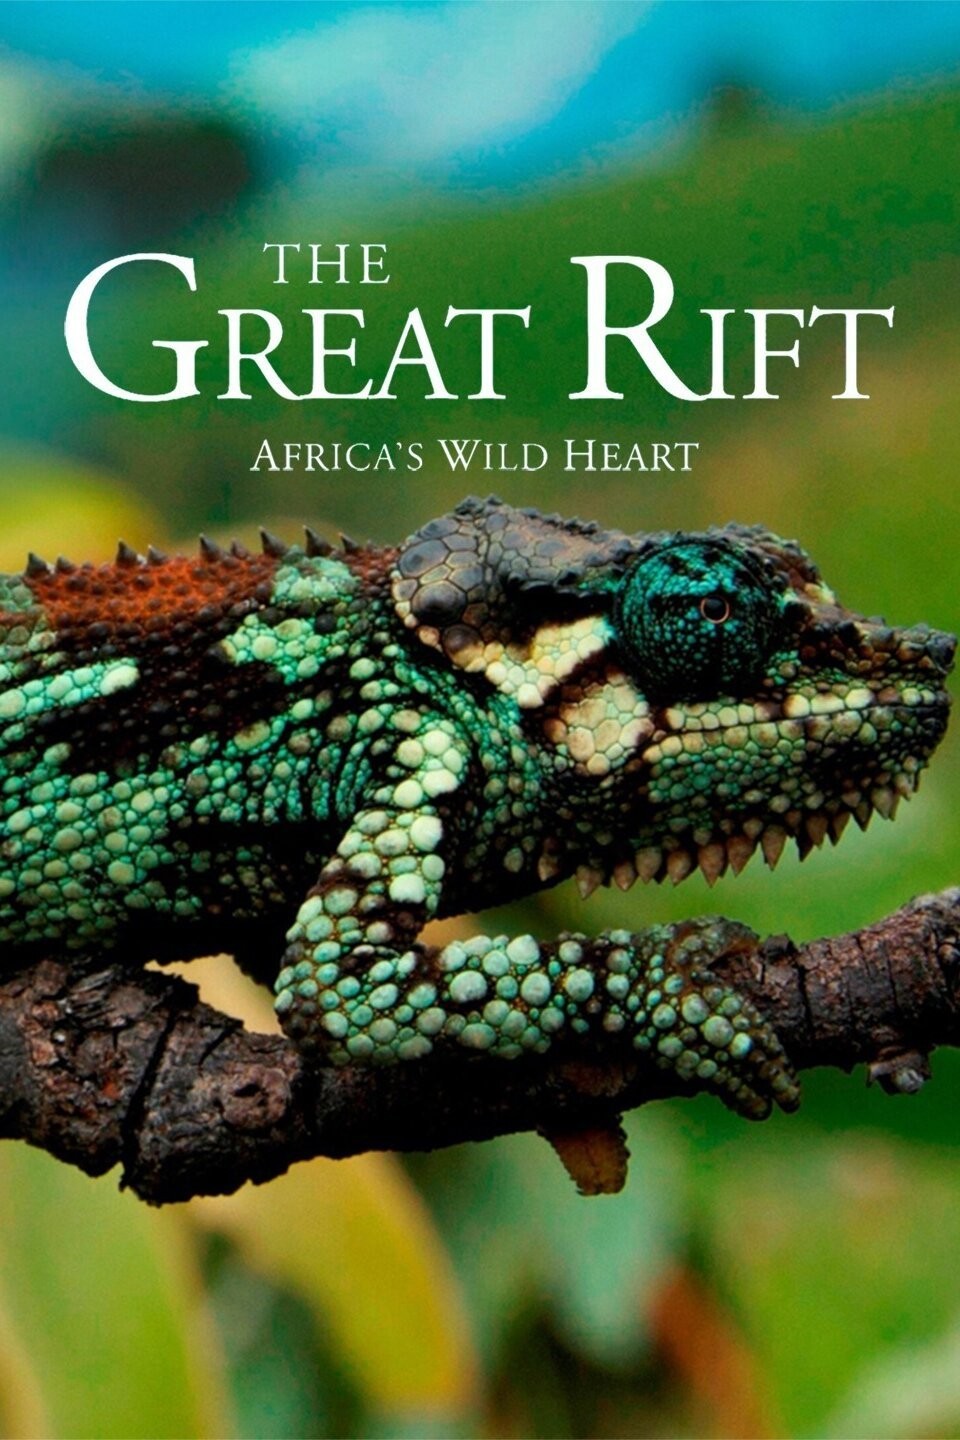 The Great Rift: Africa's Wild Heart - Wikipedia